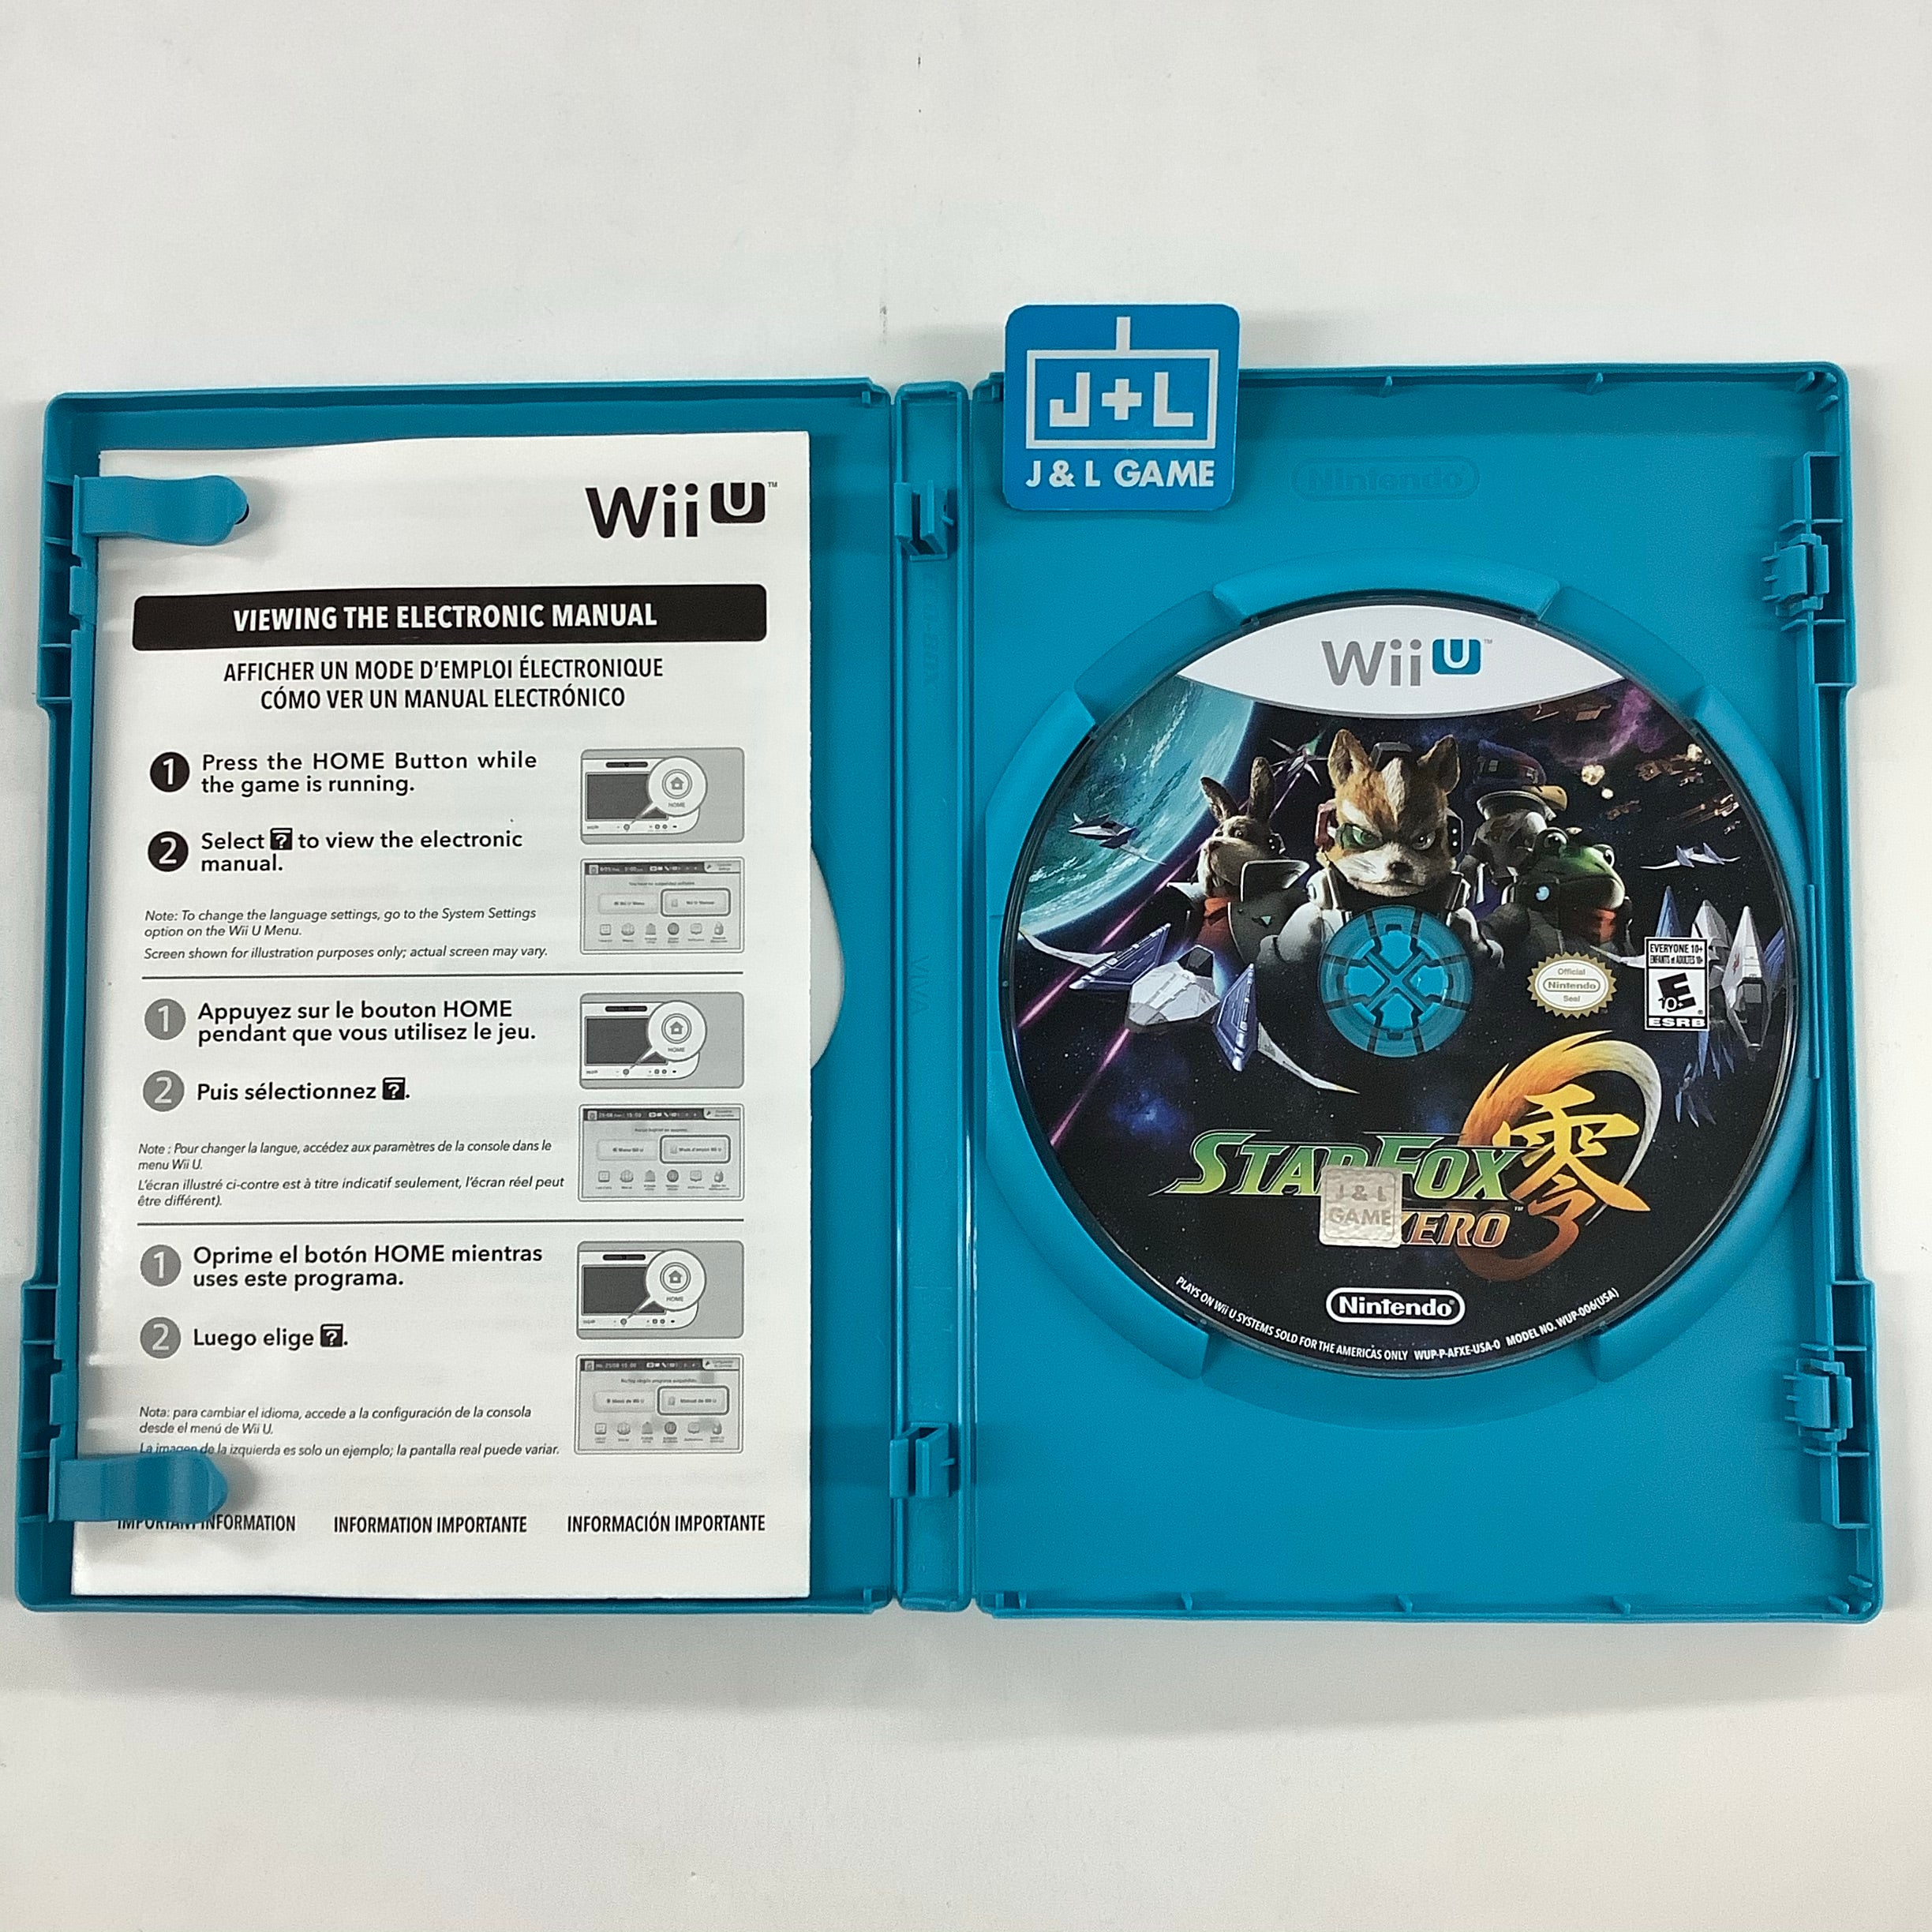 Star Fox Zero - Nintendo Wii U [Pre-Owned] Video Games Nintendo   